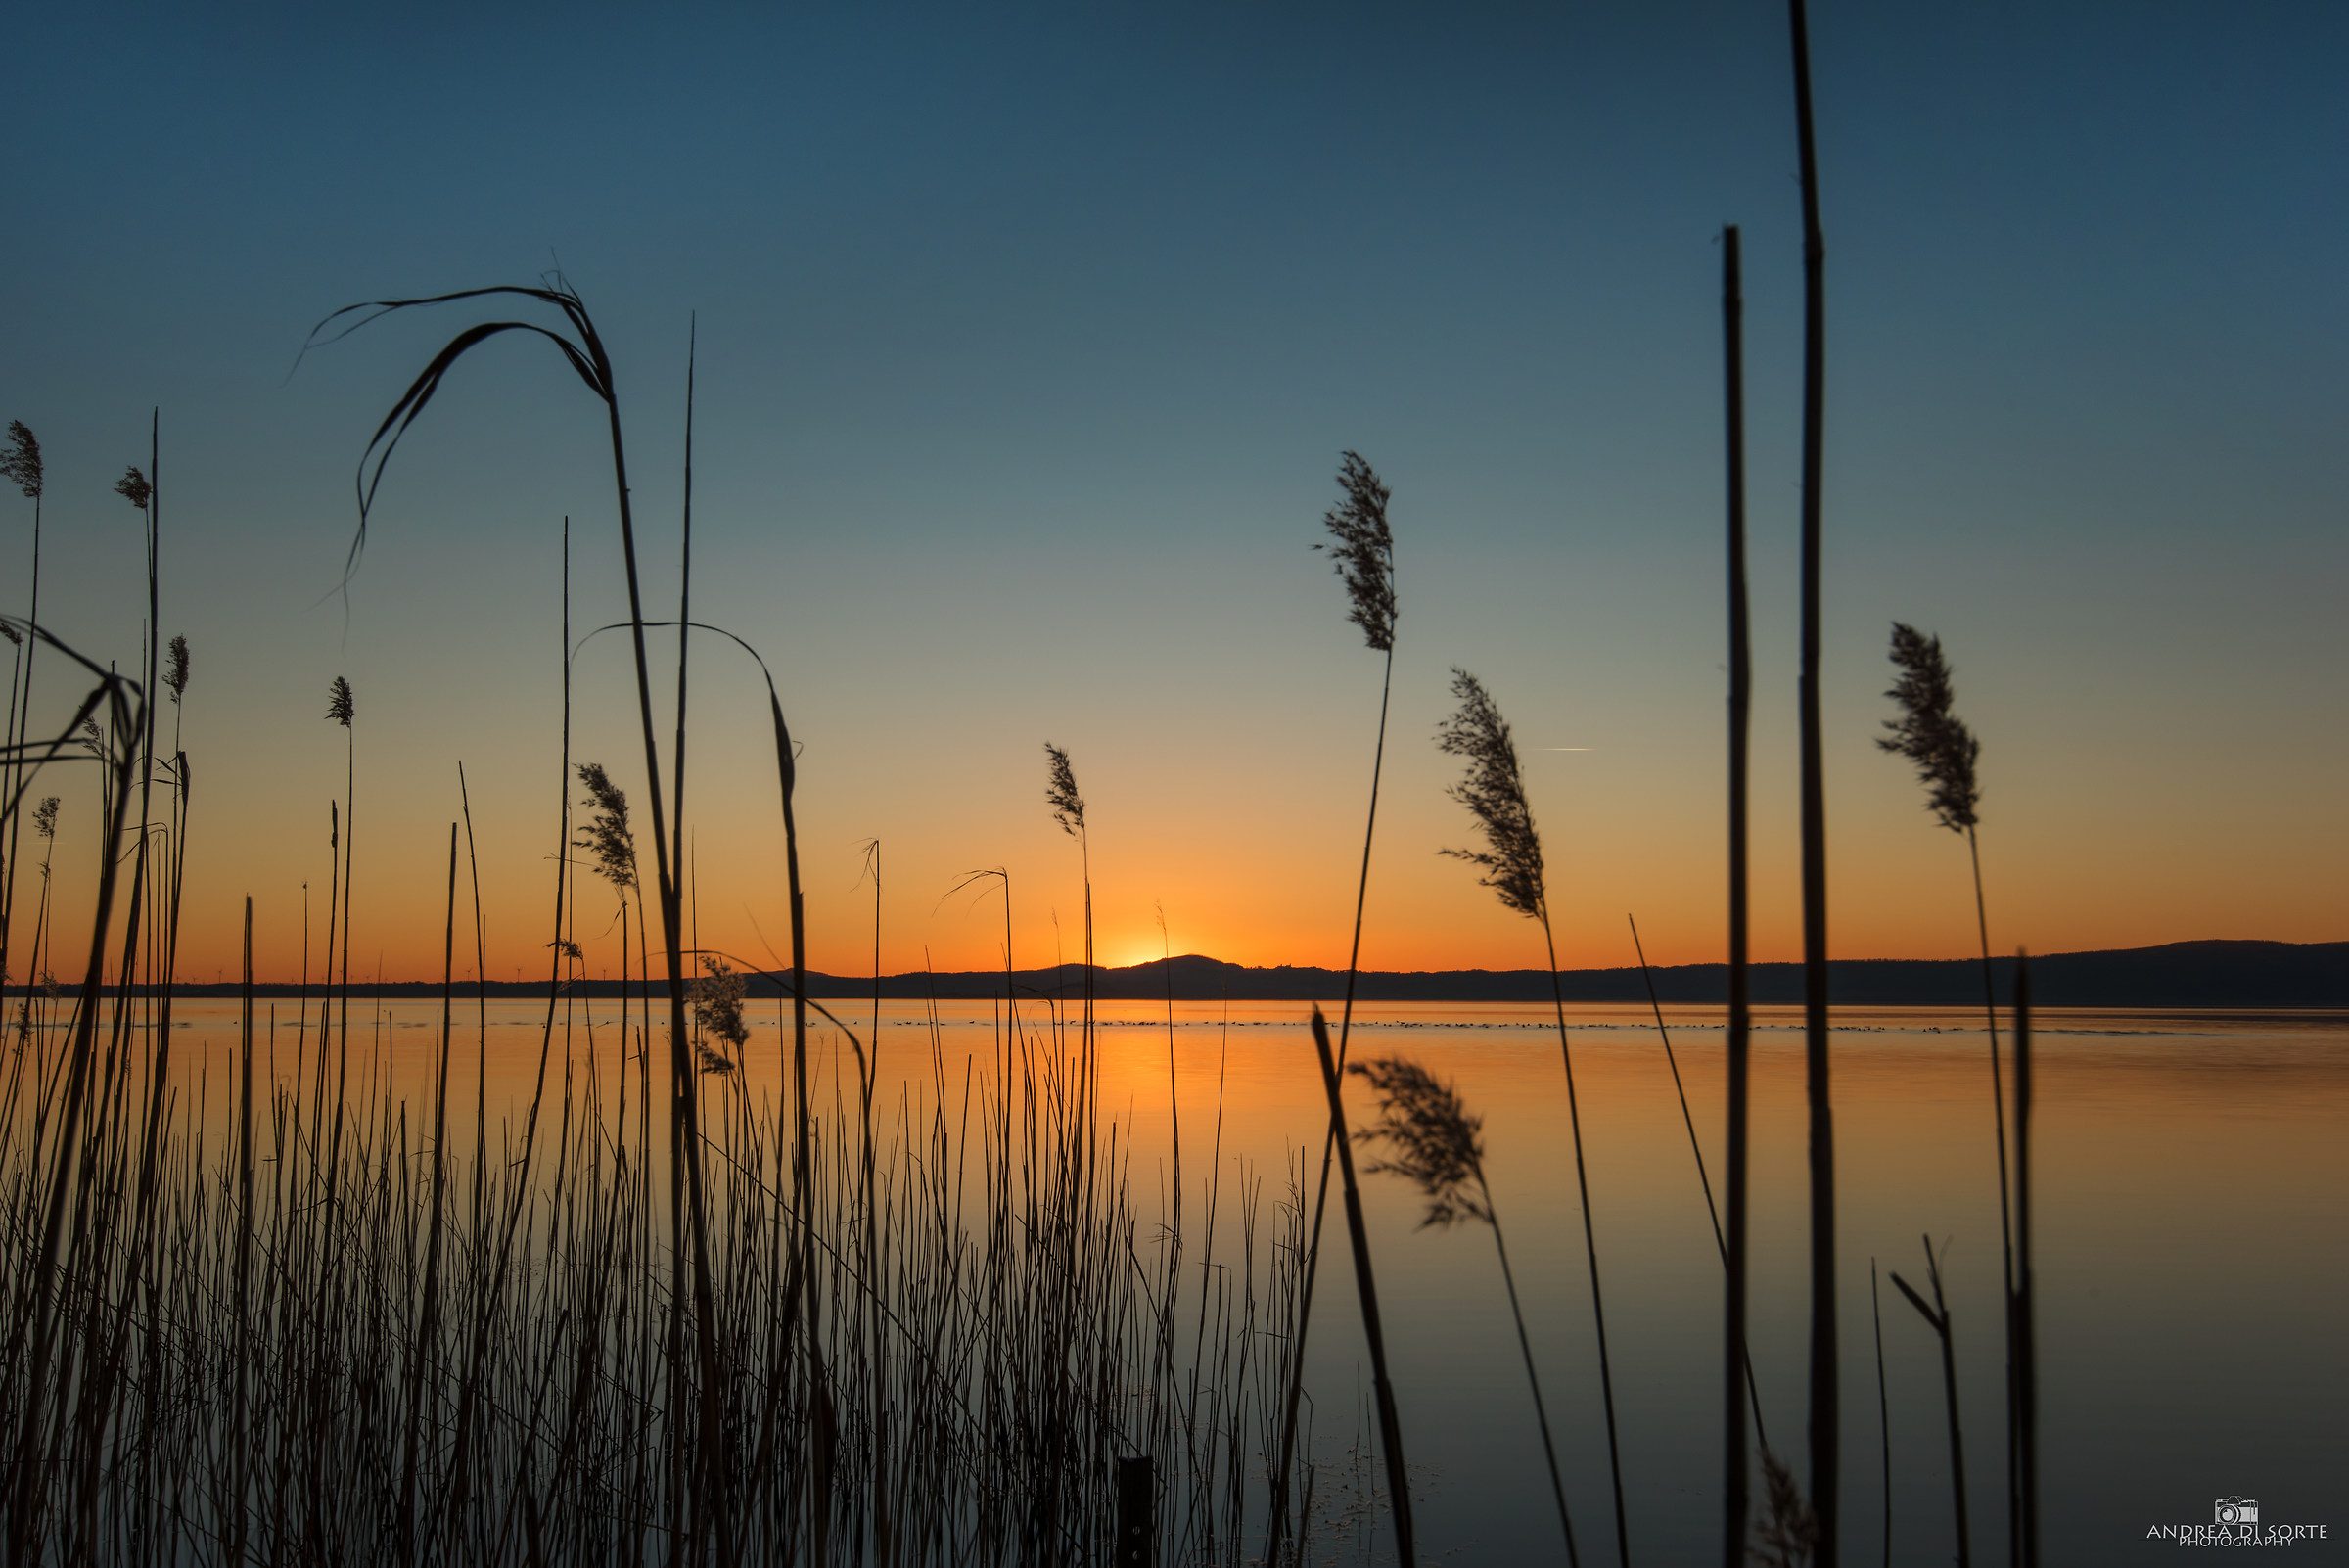 The stillness of the lake...